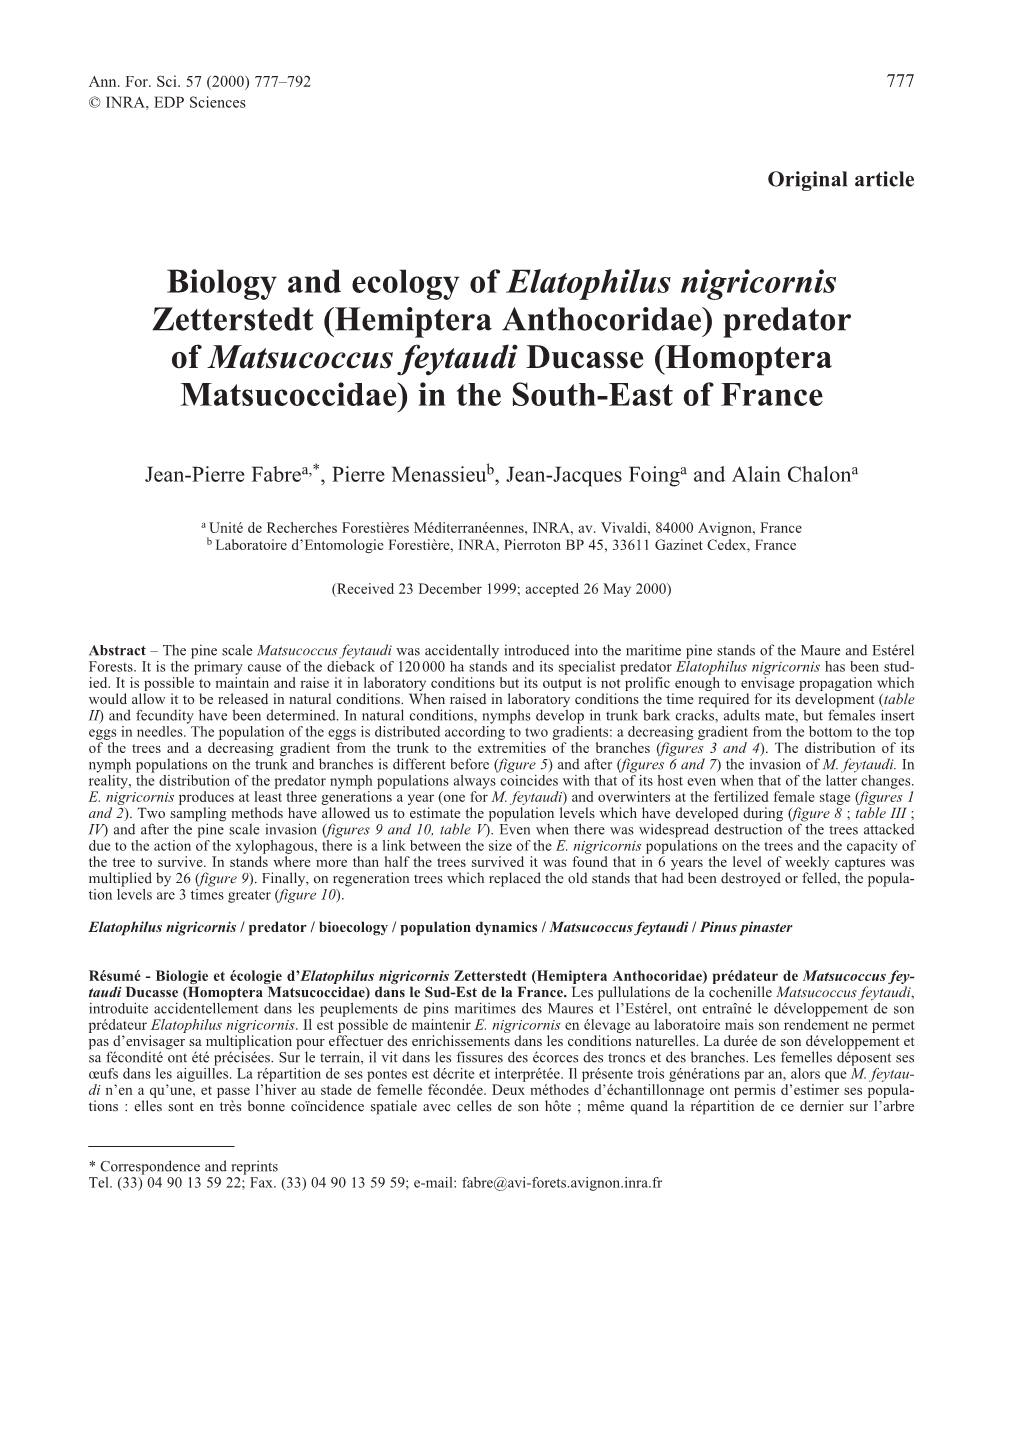 Biology and Ecology of Elatophilus Nigricornis Zetterstedt (Hemiptera Anthocoridae) Predator of Matsucoccus Feytaudi Ducasse